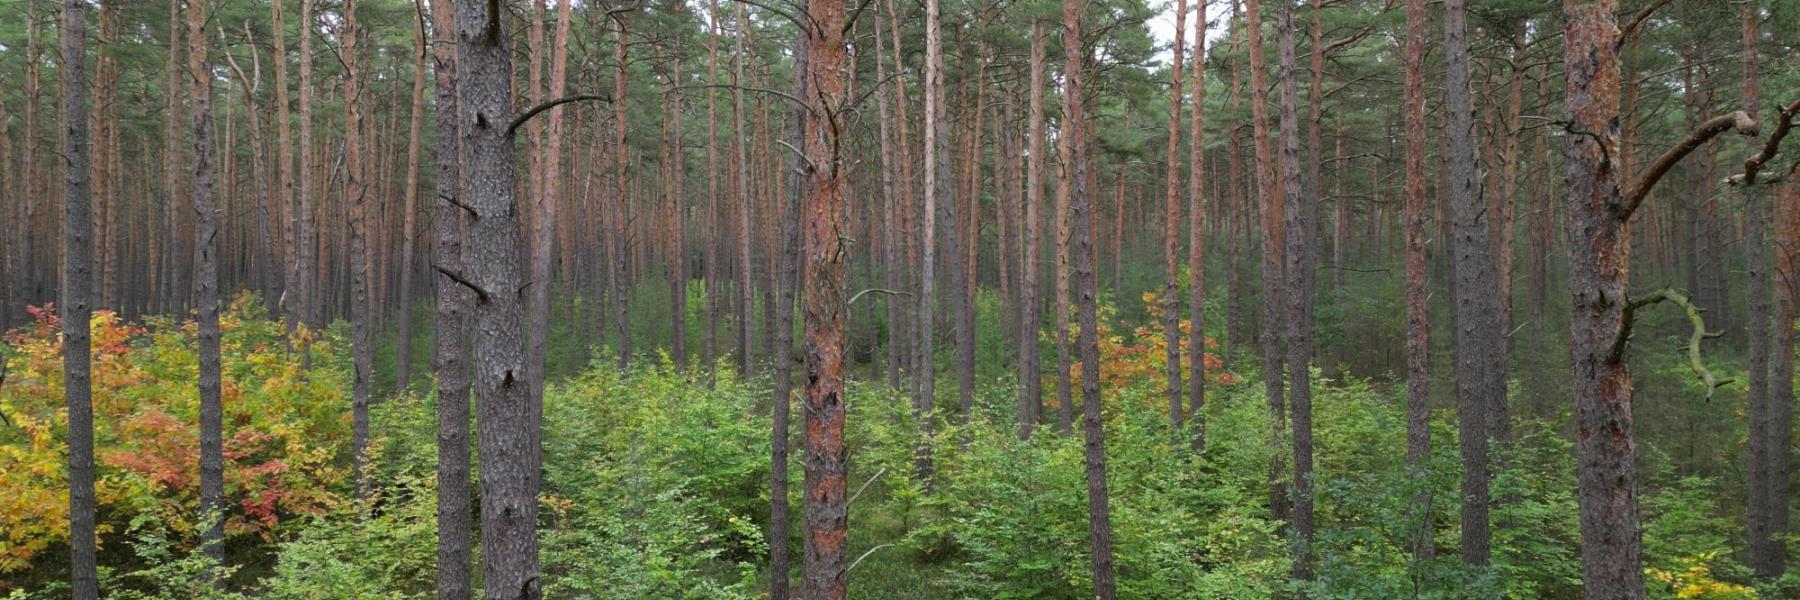 Tysk fyrreskov med underplantet bøg